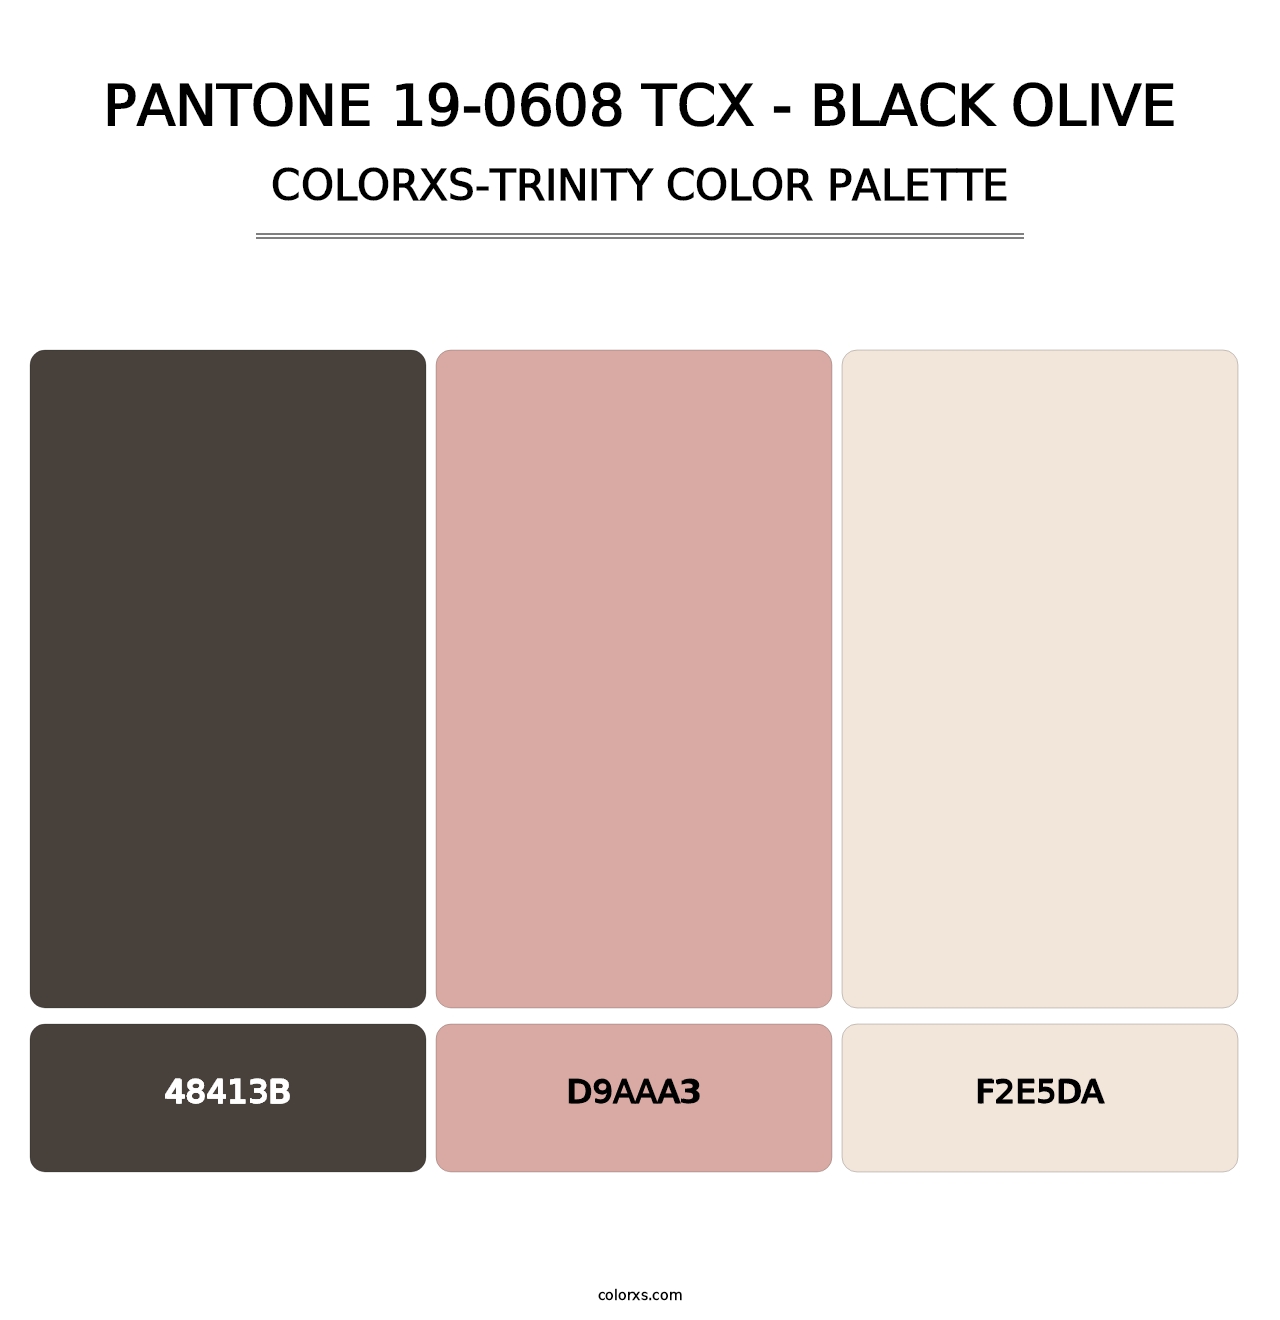 PANTONE 19-0608 TCX - Black Olive - Colorxs Trinity Palette